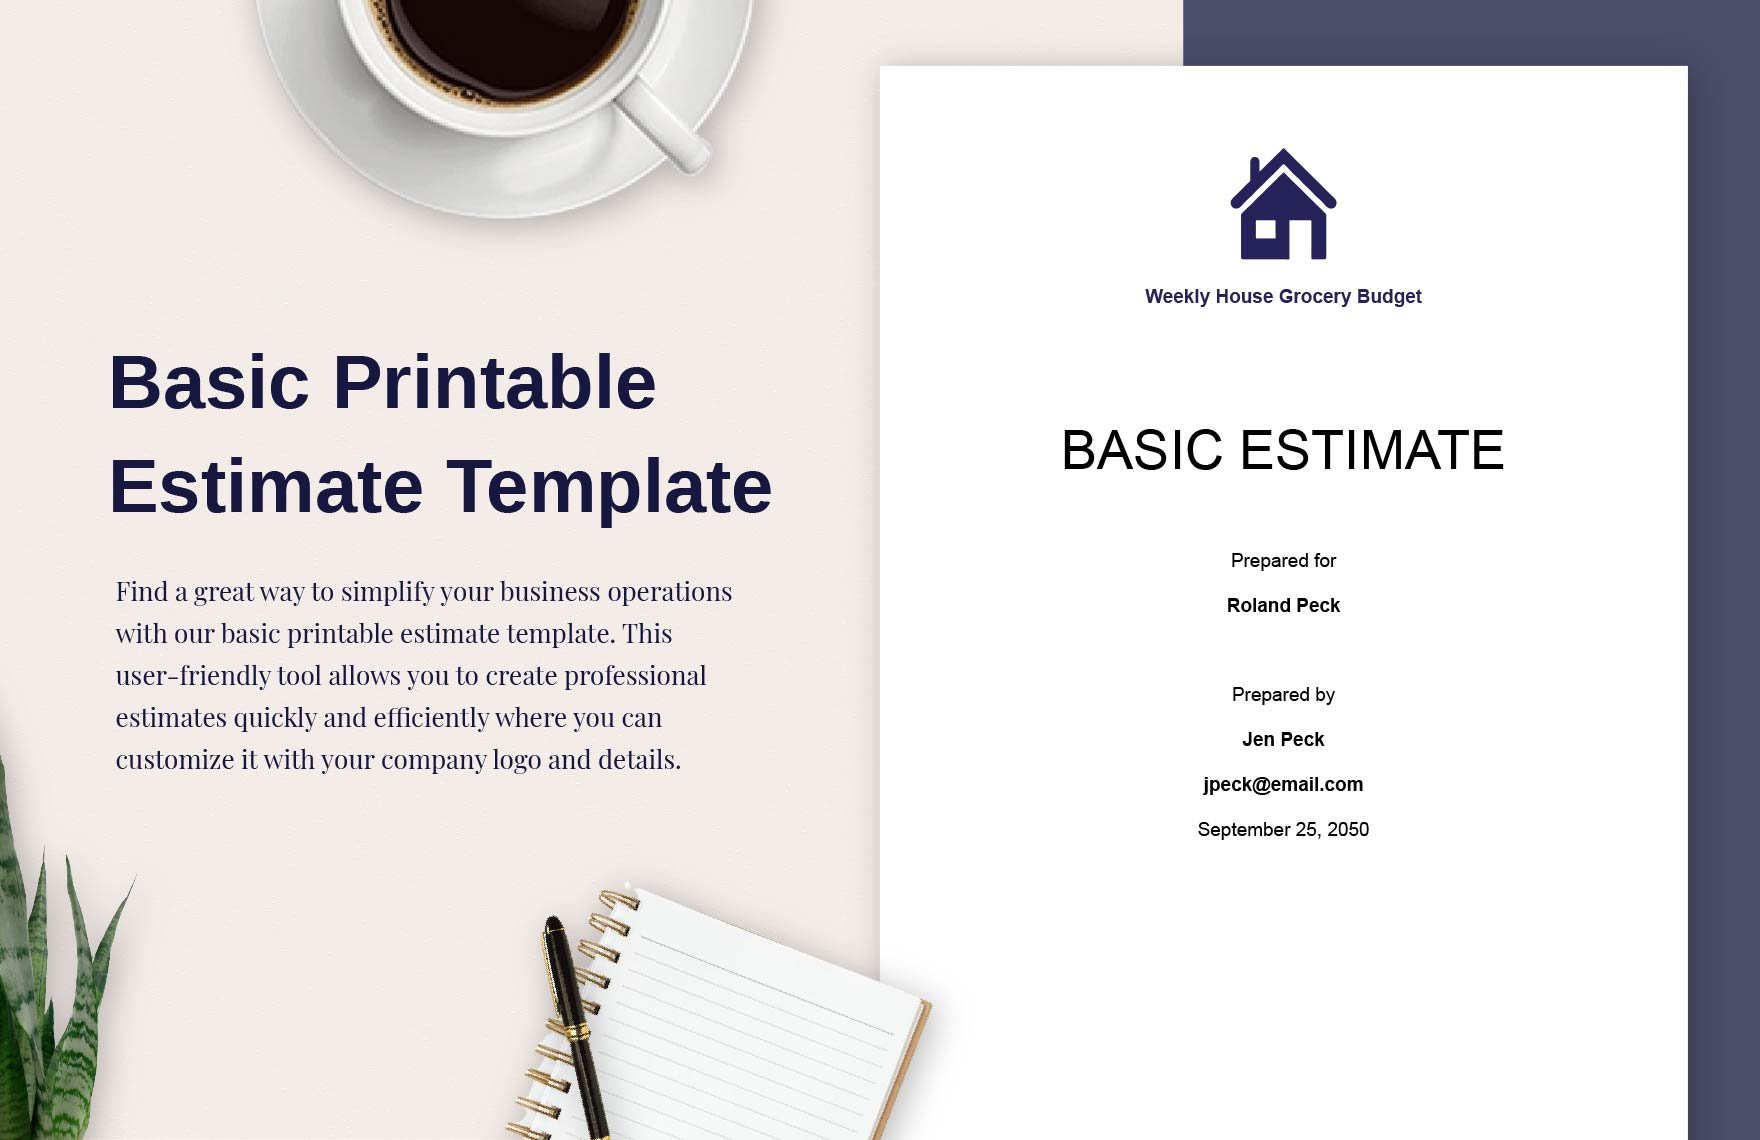 Basic Printable Estimate Template